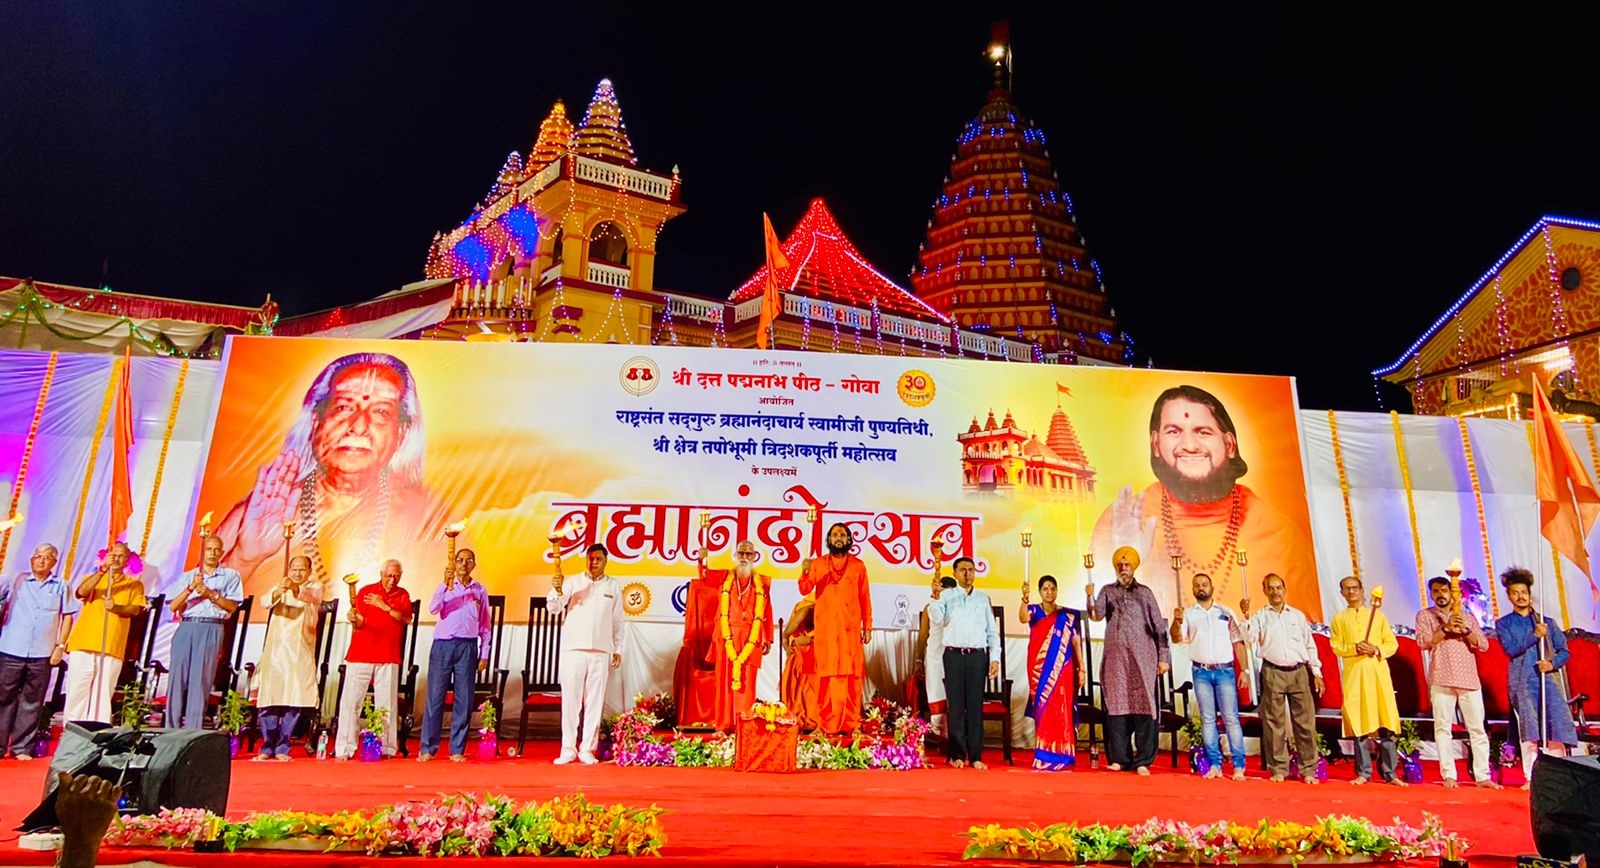 ﻿Sanatan Dharma unites everyone, says Sadguru Brahmeshanand